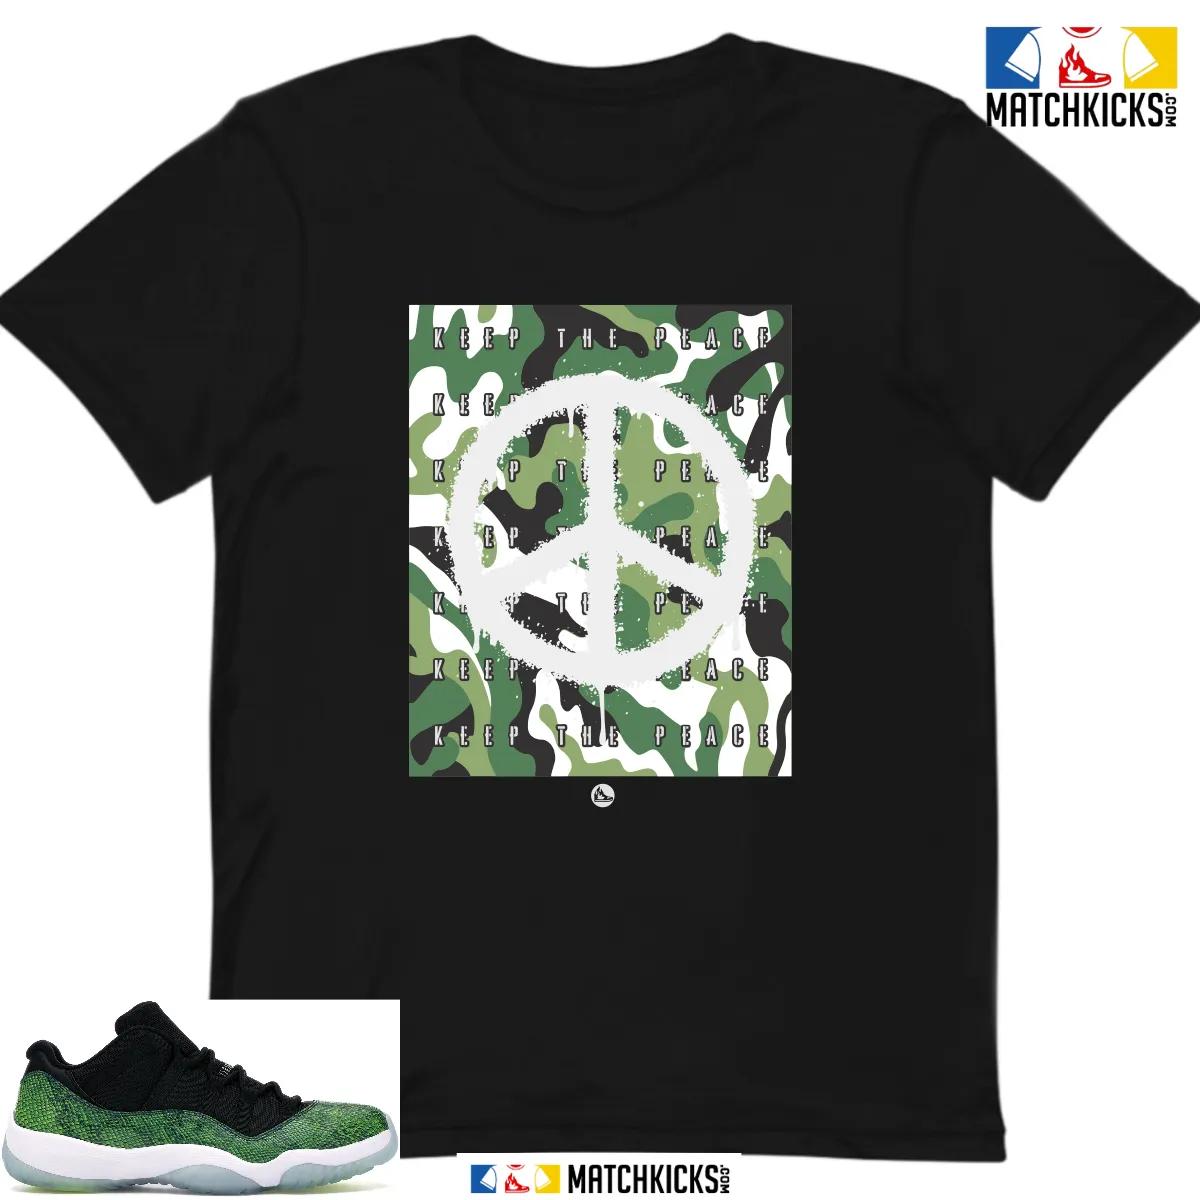 Custom Match - Black T-Shirt - Air Jordan 11 Retro Low Green Snakeskin - Keep the Peace